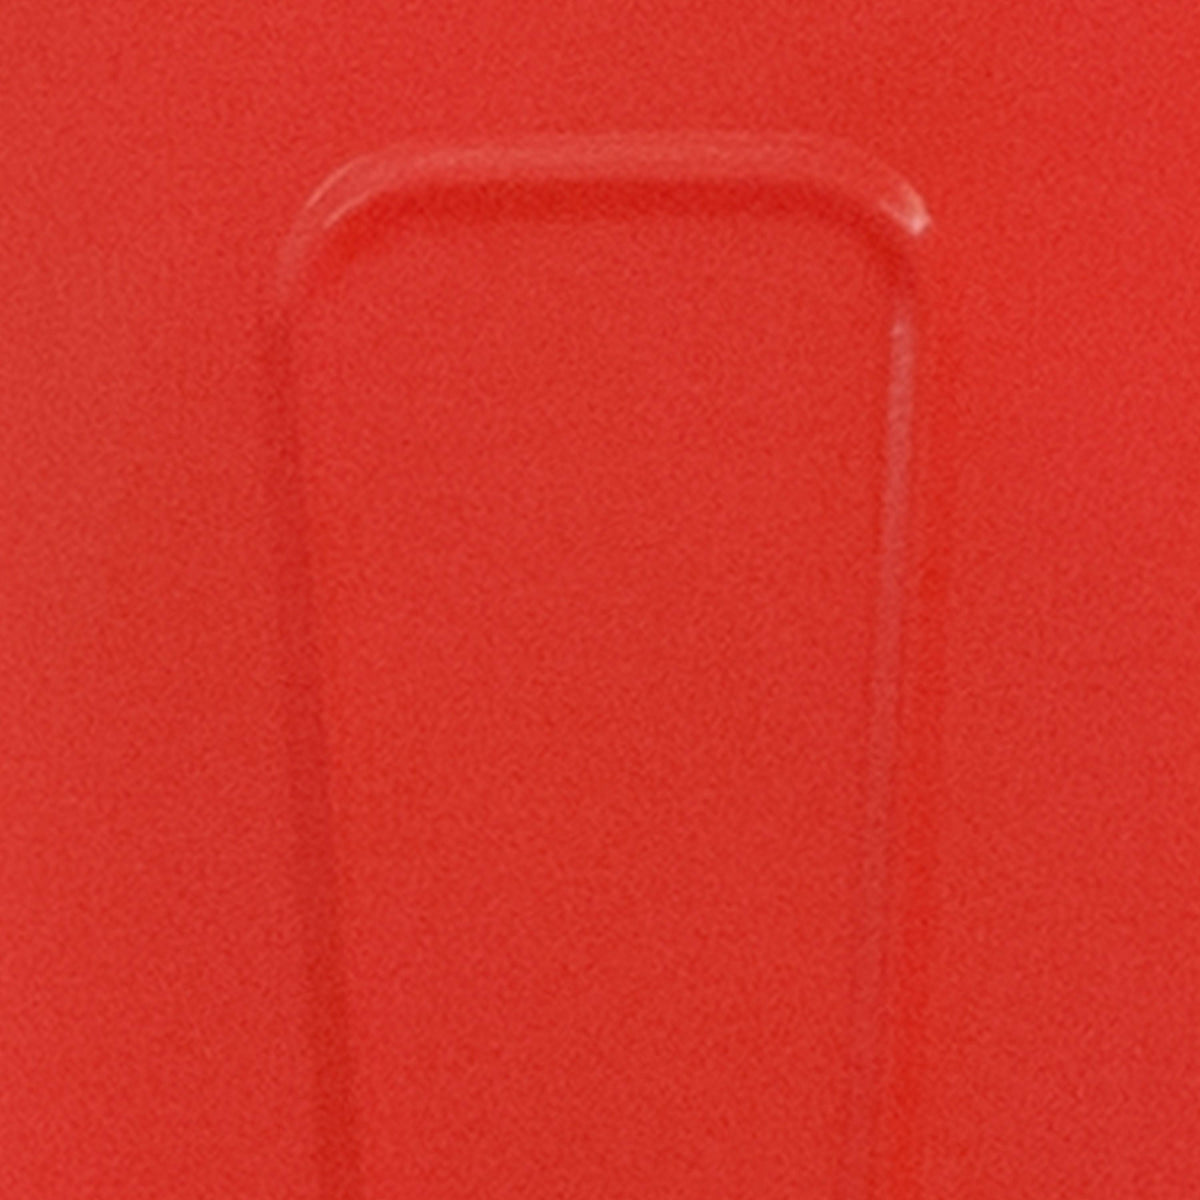 Red |#| Red Metal Indoor-Outdoor Stackable Chair - Restaurant Chair - Bistro Chair